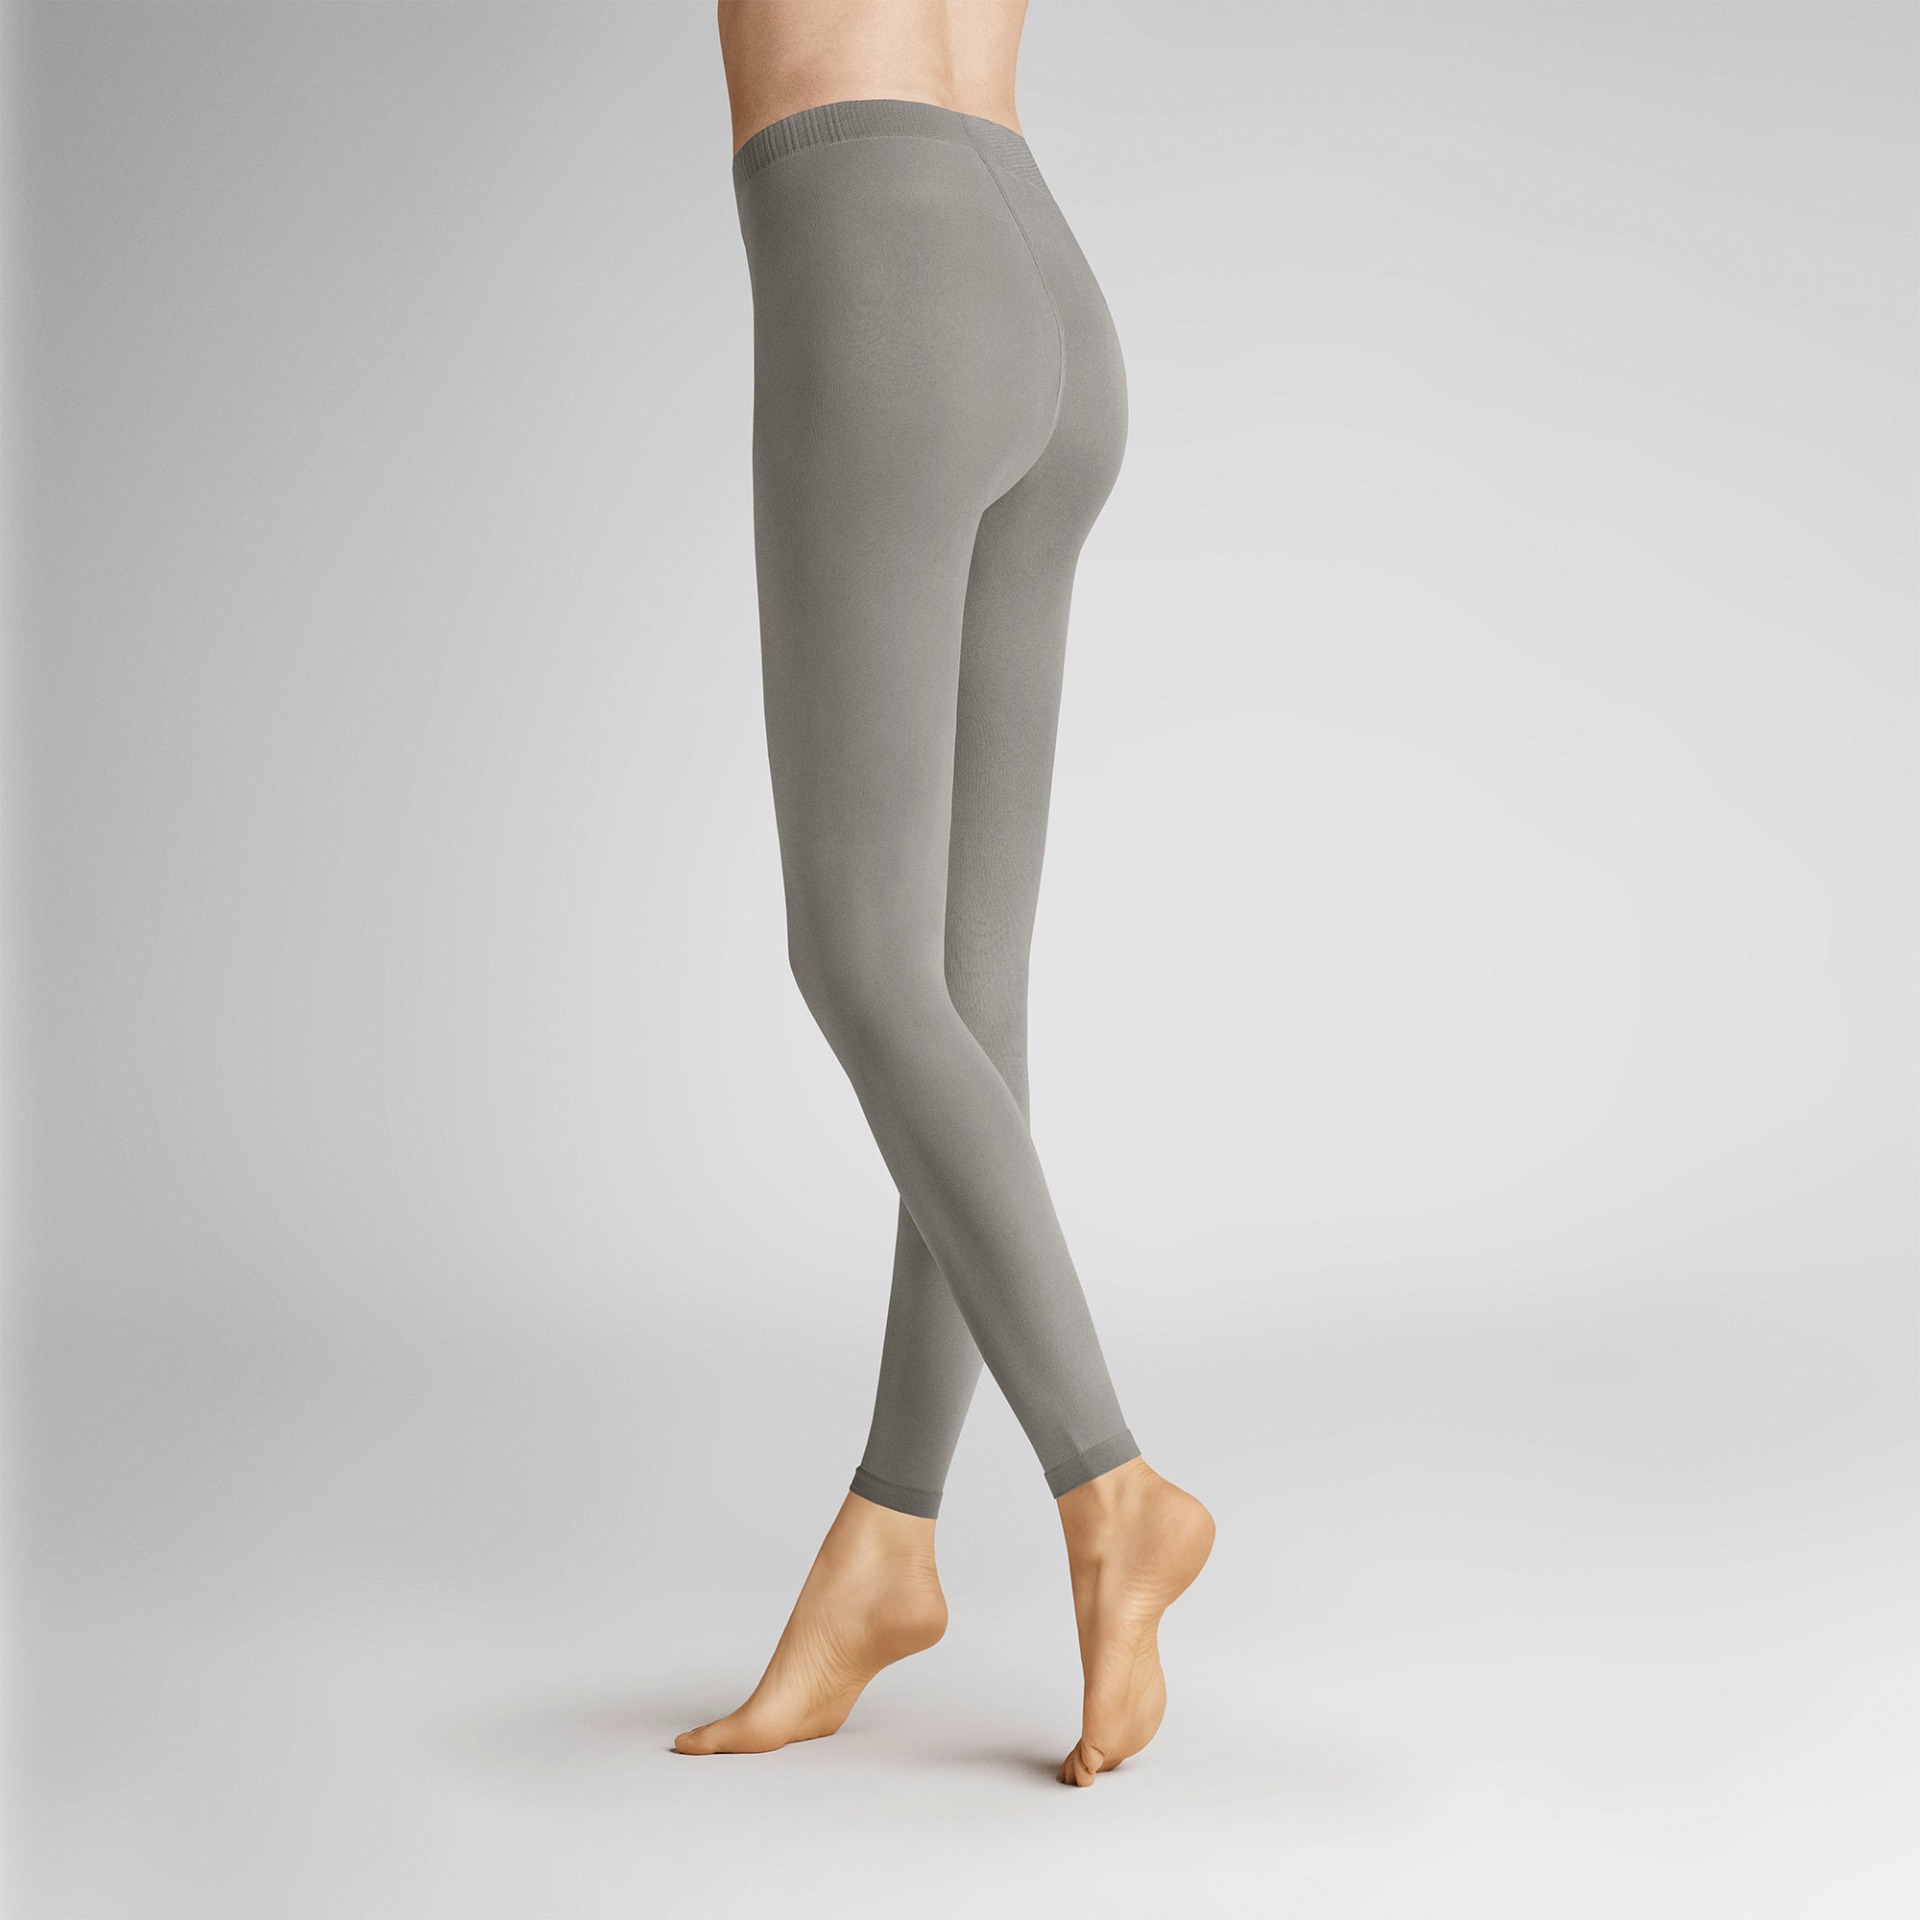 HUDSON Damen MICRO 50 -  44/46 - Semi-blickdichte Leggings mit ebenmäßiger Optik - Slate gray 0106 (Grau)